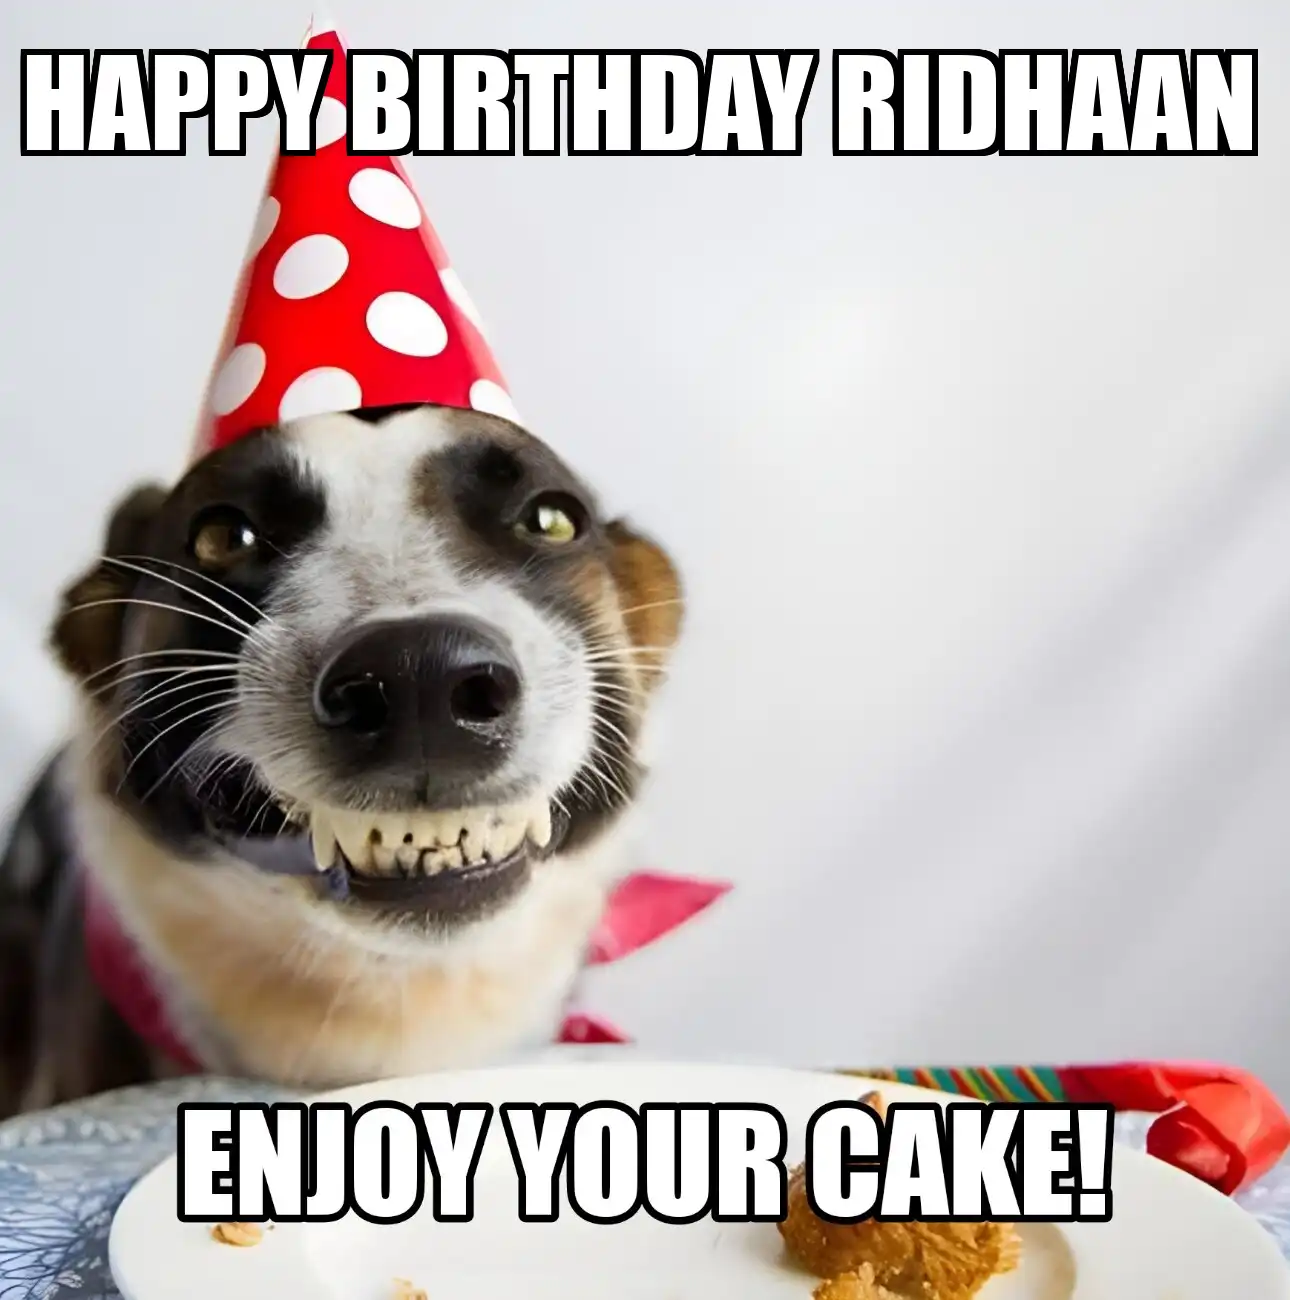 Happy Birthday Ridhaan Enjoy Your Cake Dog Meme